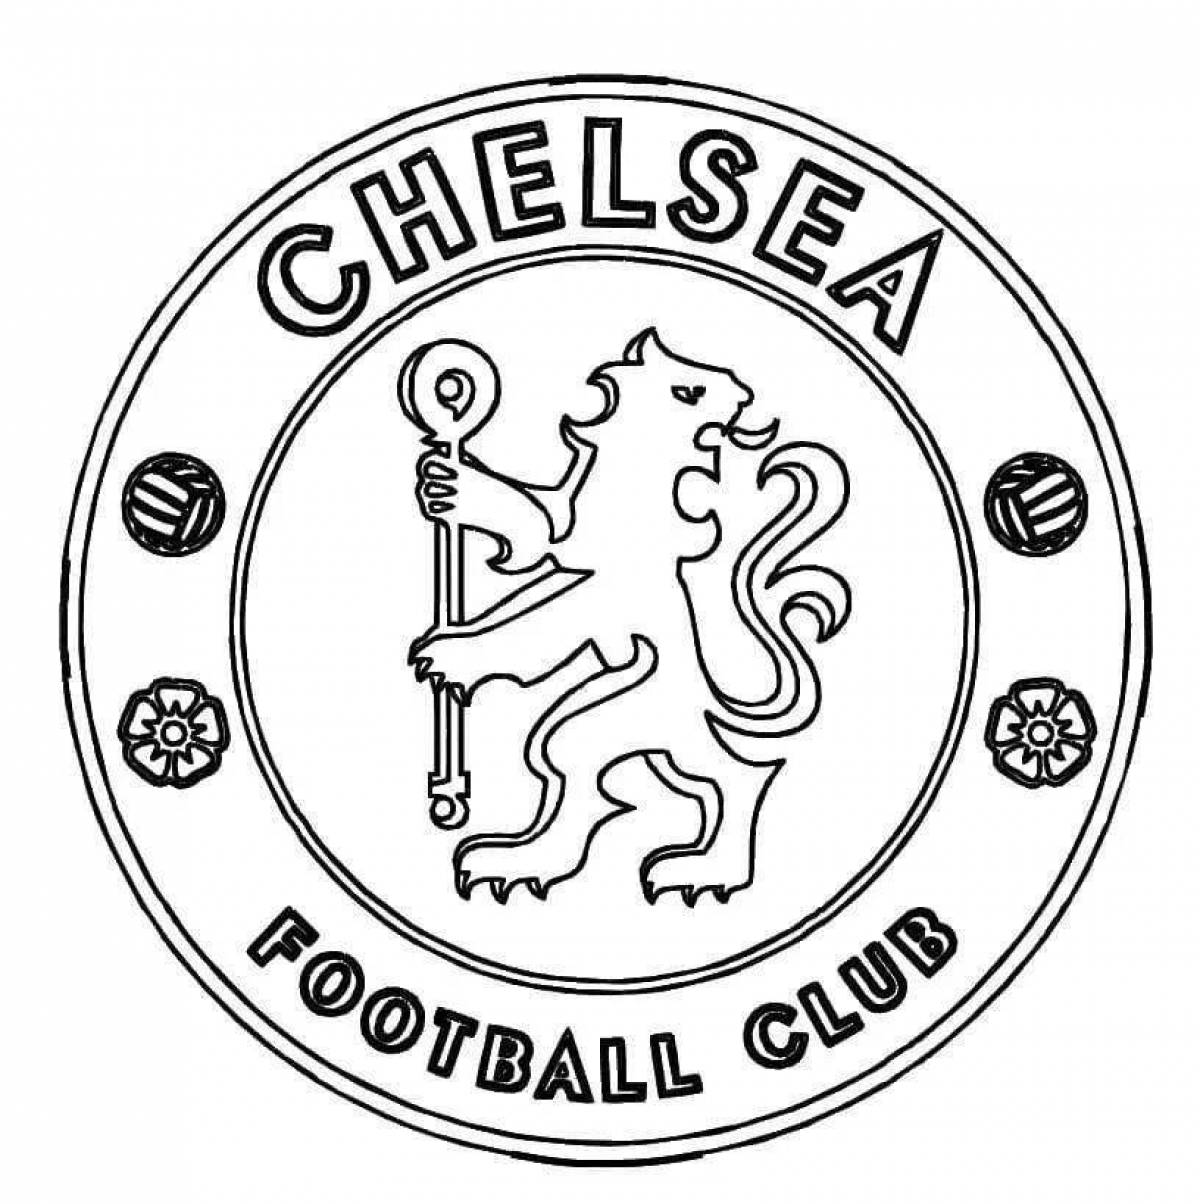 Football club emblems #11